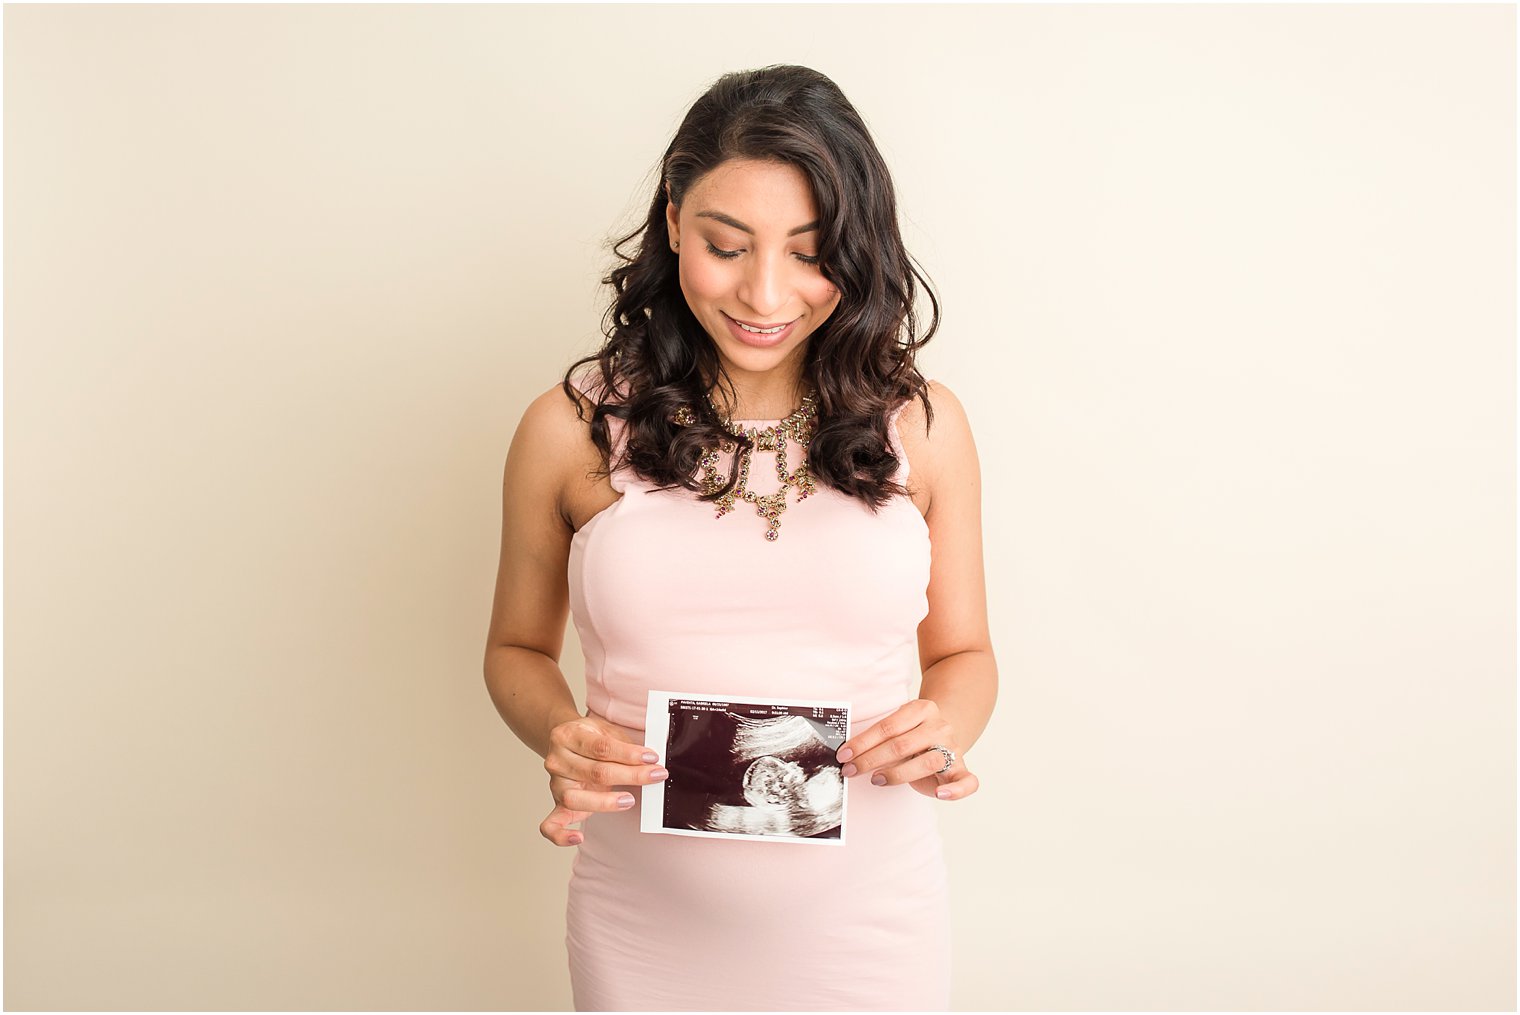 Pregnancy announcement photos in studio | Photo by Idalia Photography